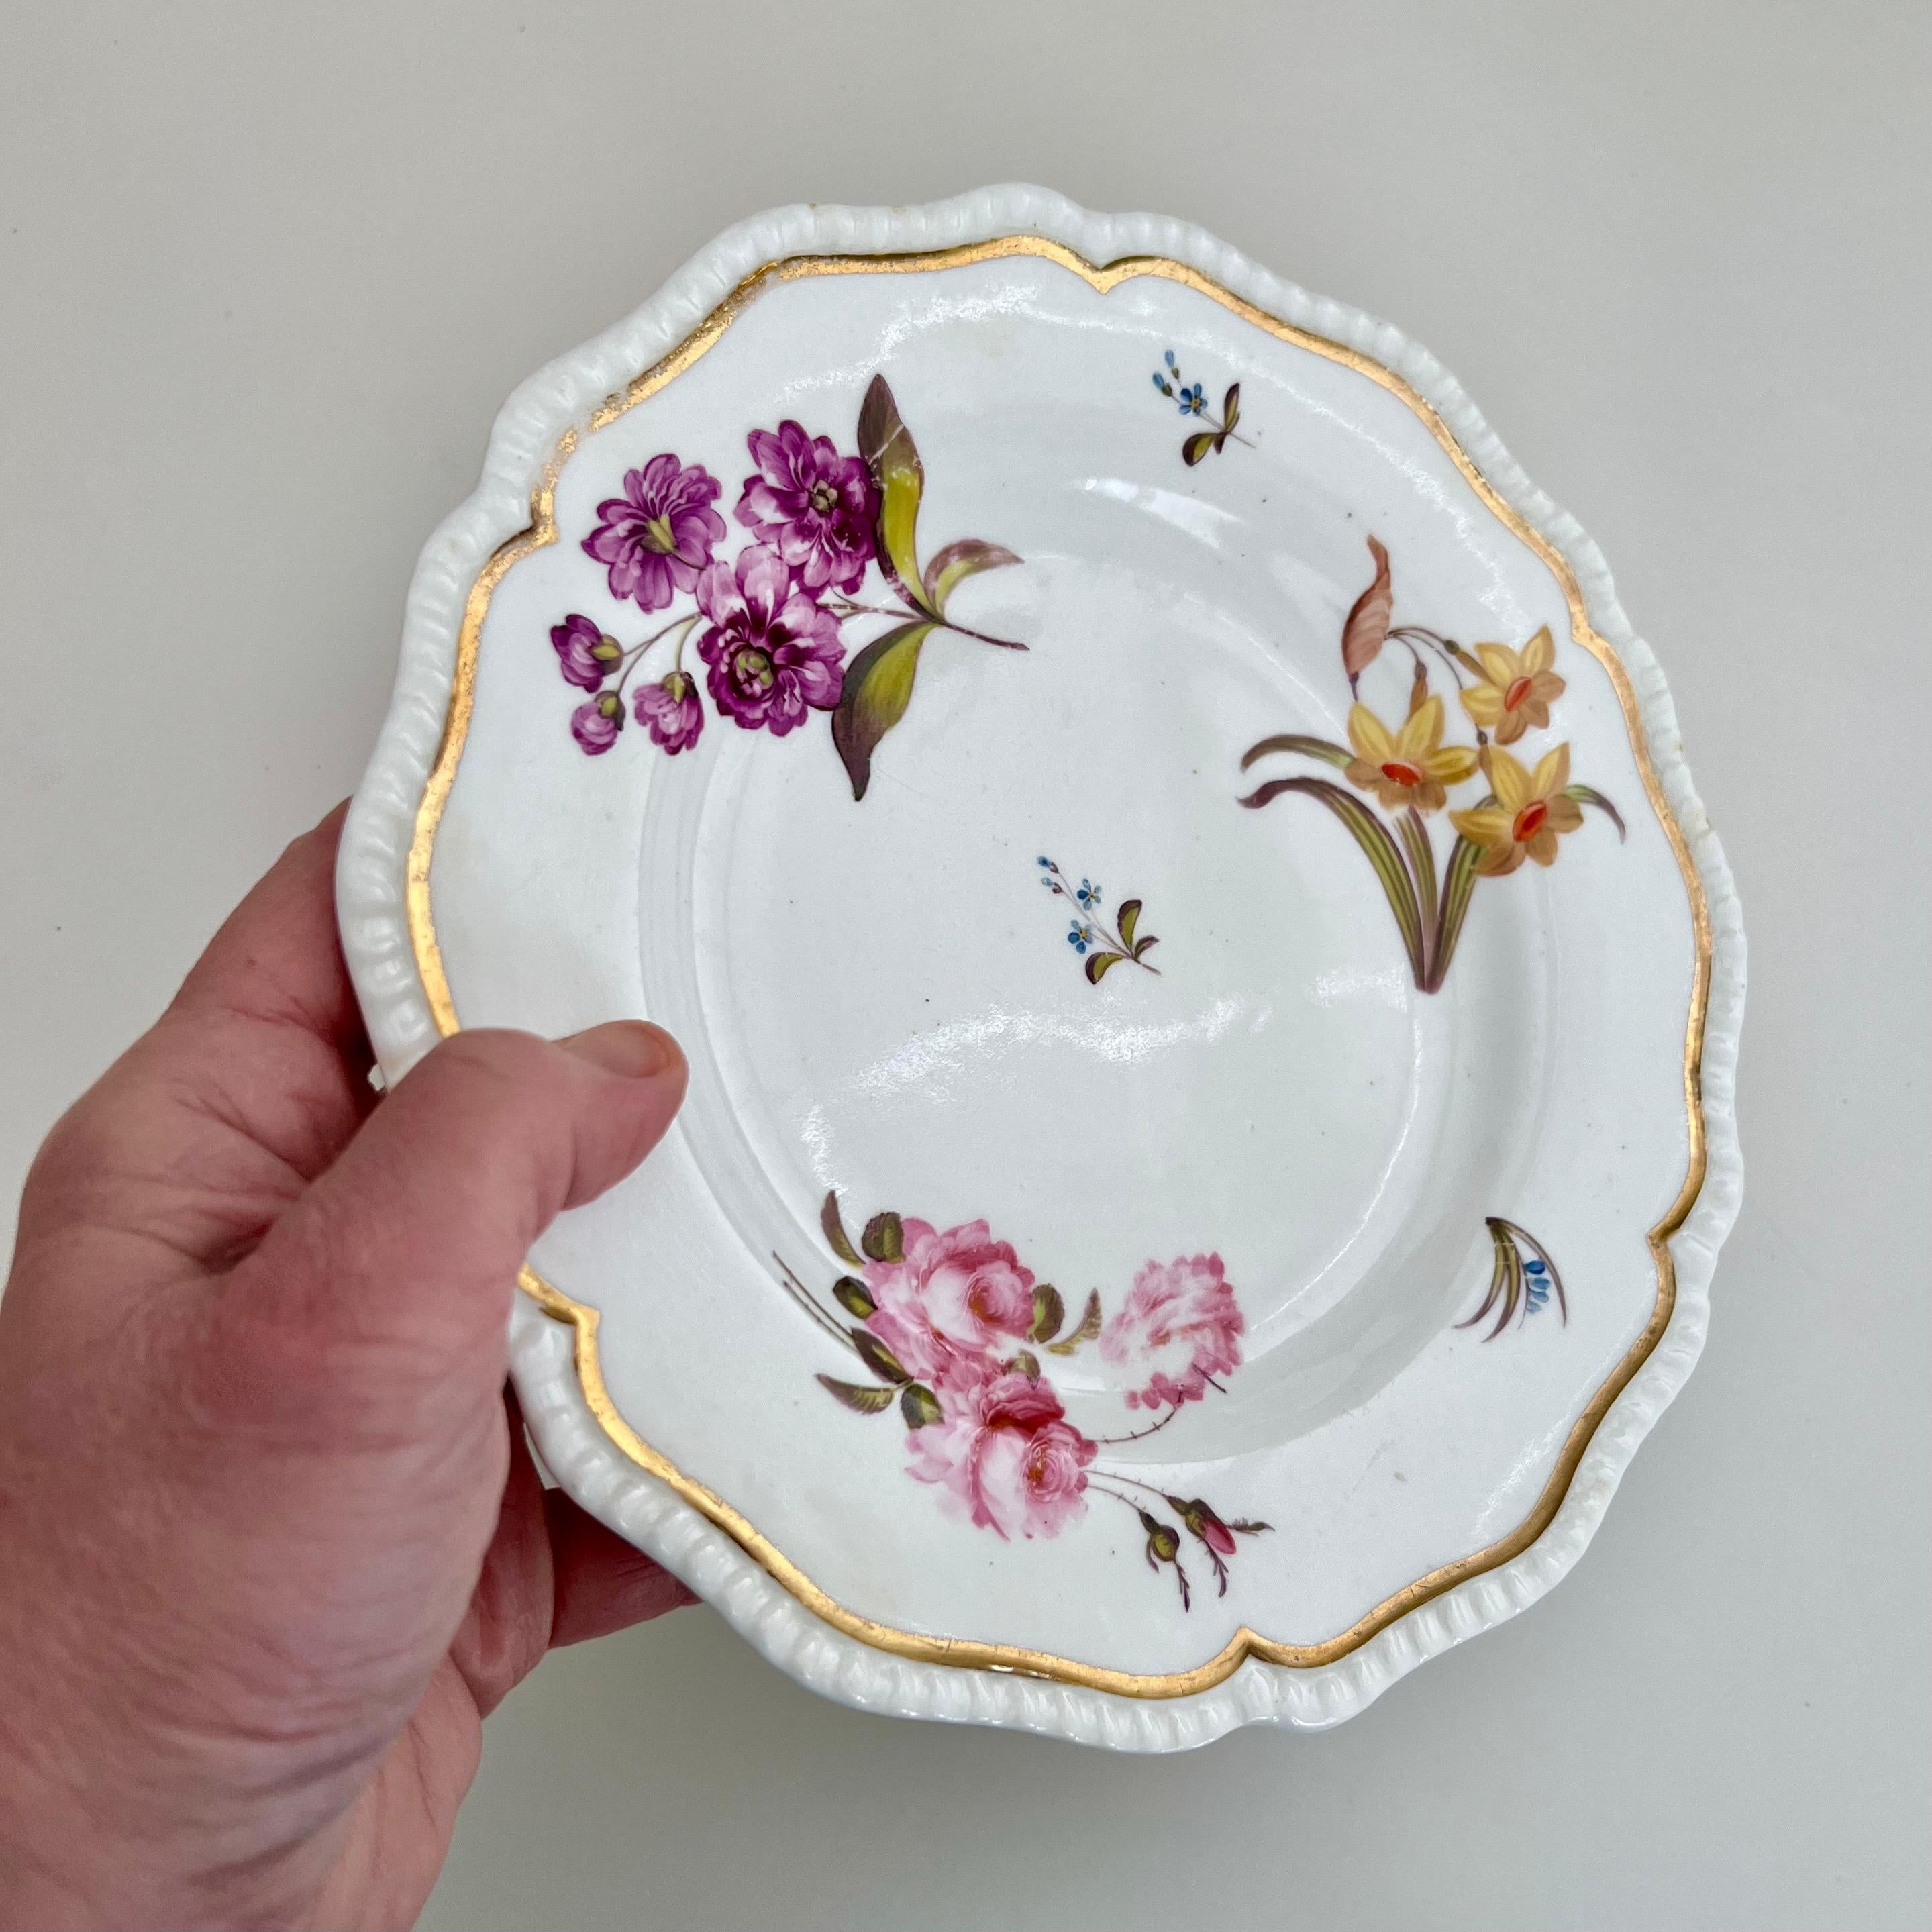 English H&R Daniel Porcelain Plate, White, Floral Patt. 3998 Gadrooned, Regency Ca 1824